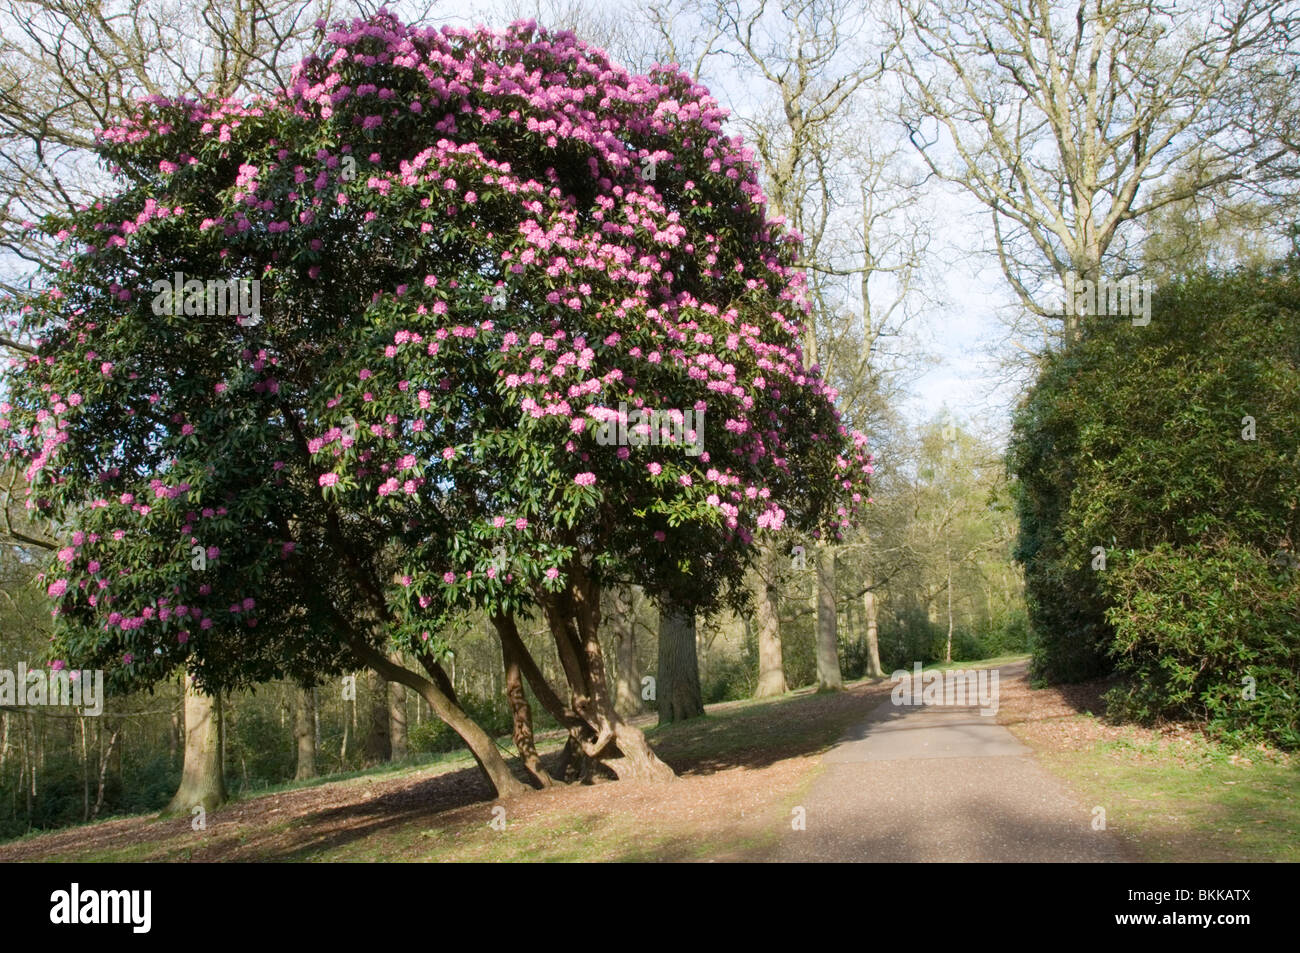 Rhododendron bush in flower at Sandringham Country Park, Norfolk, England, UK Stock Photo